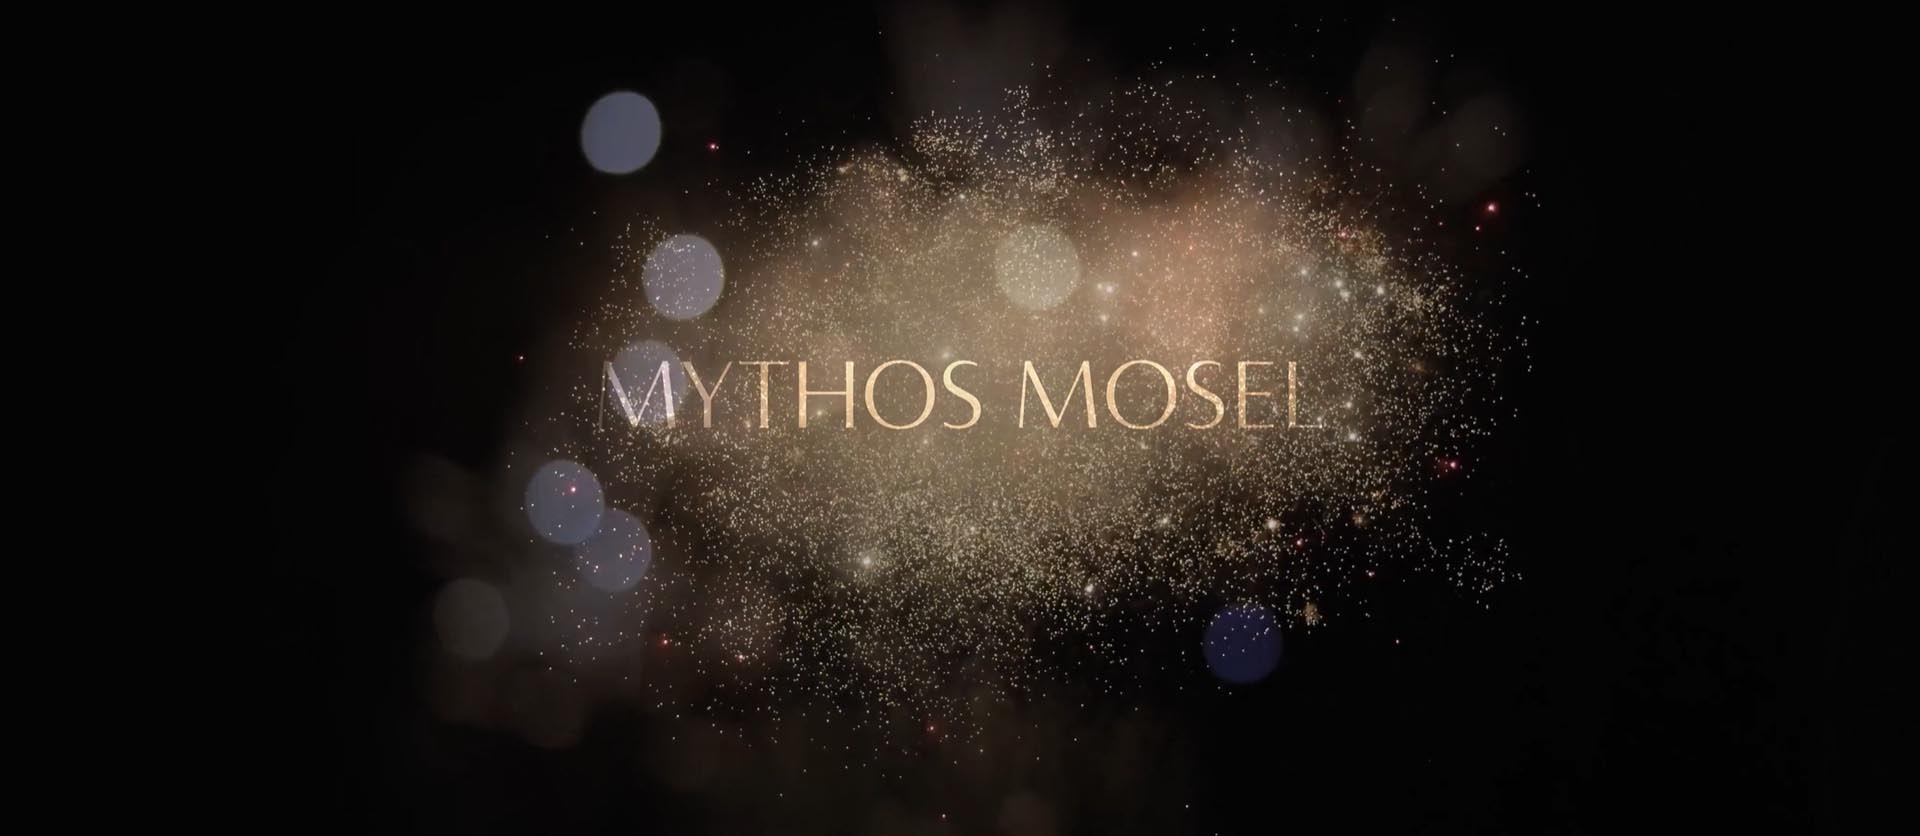 mythos mosel